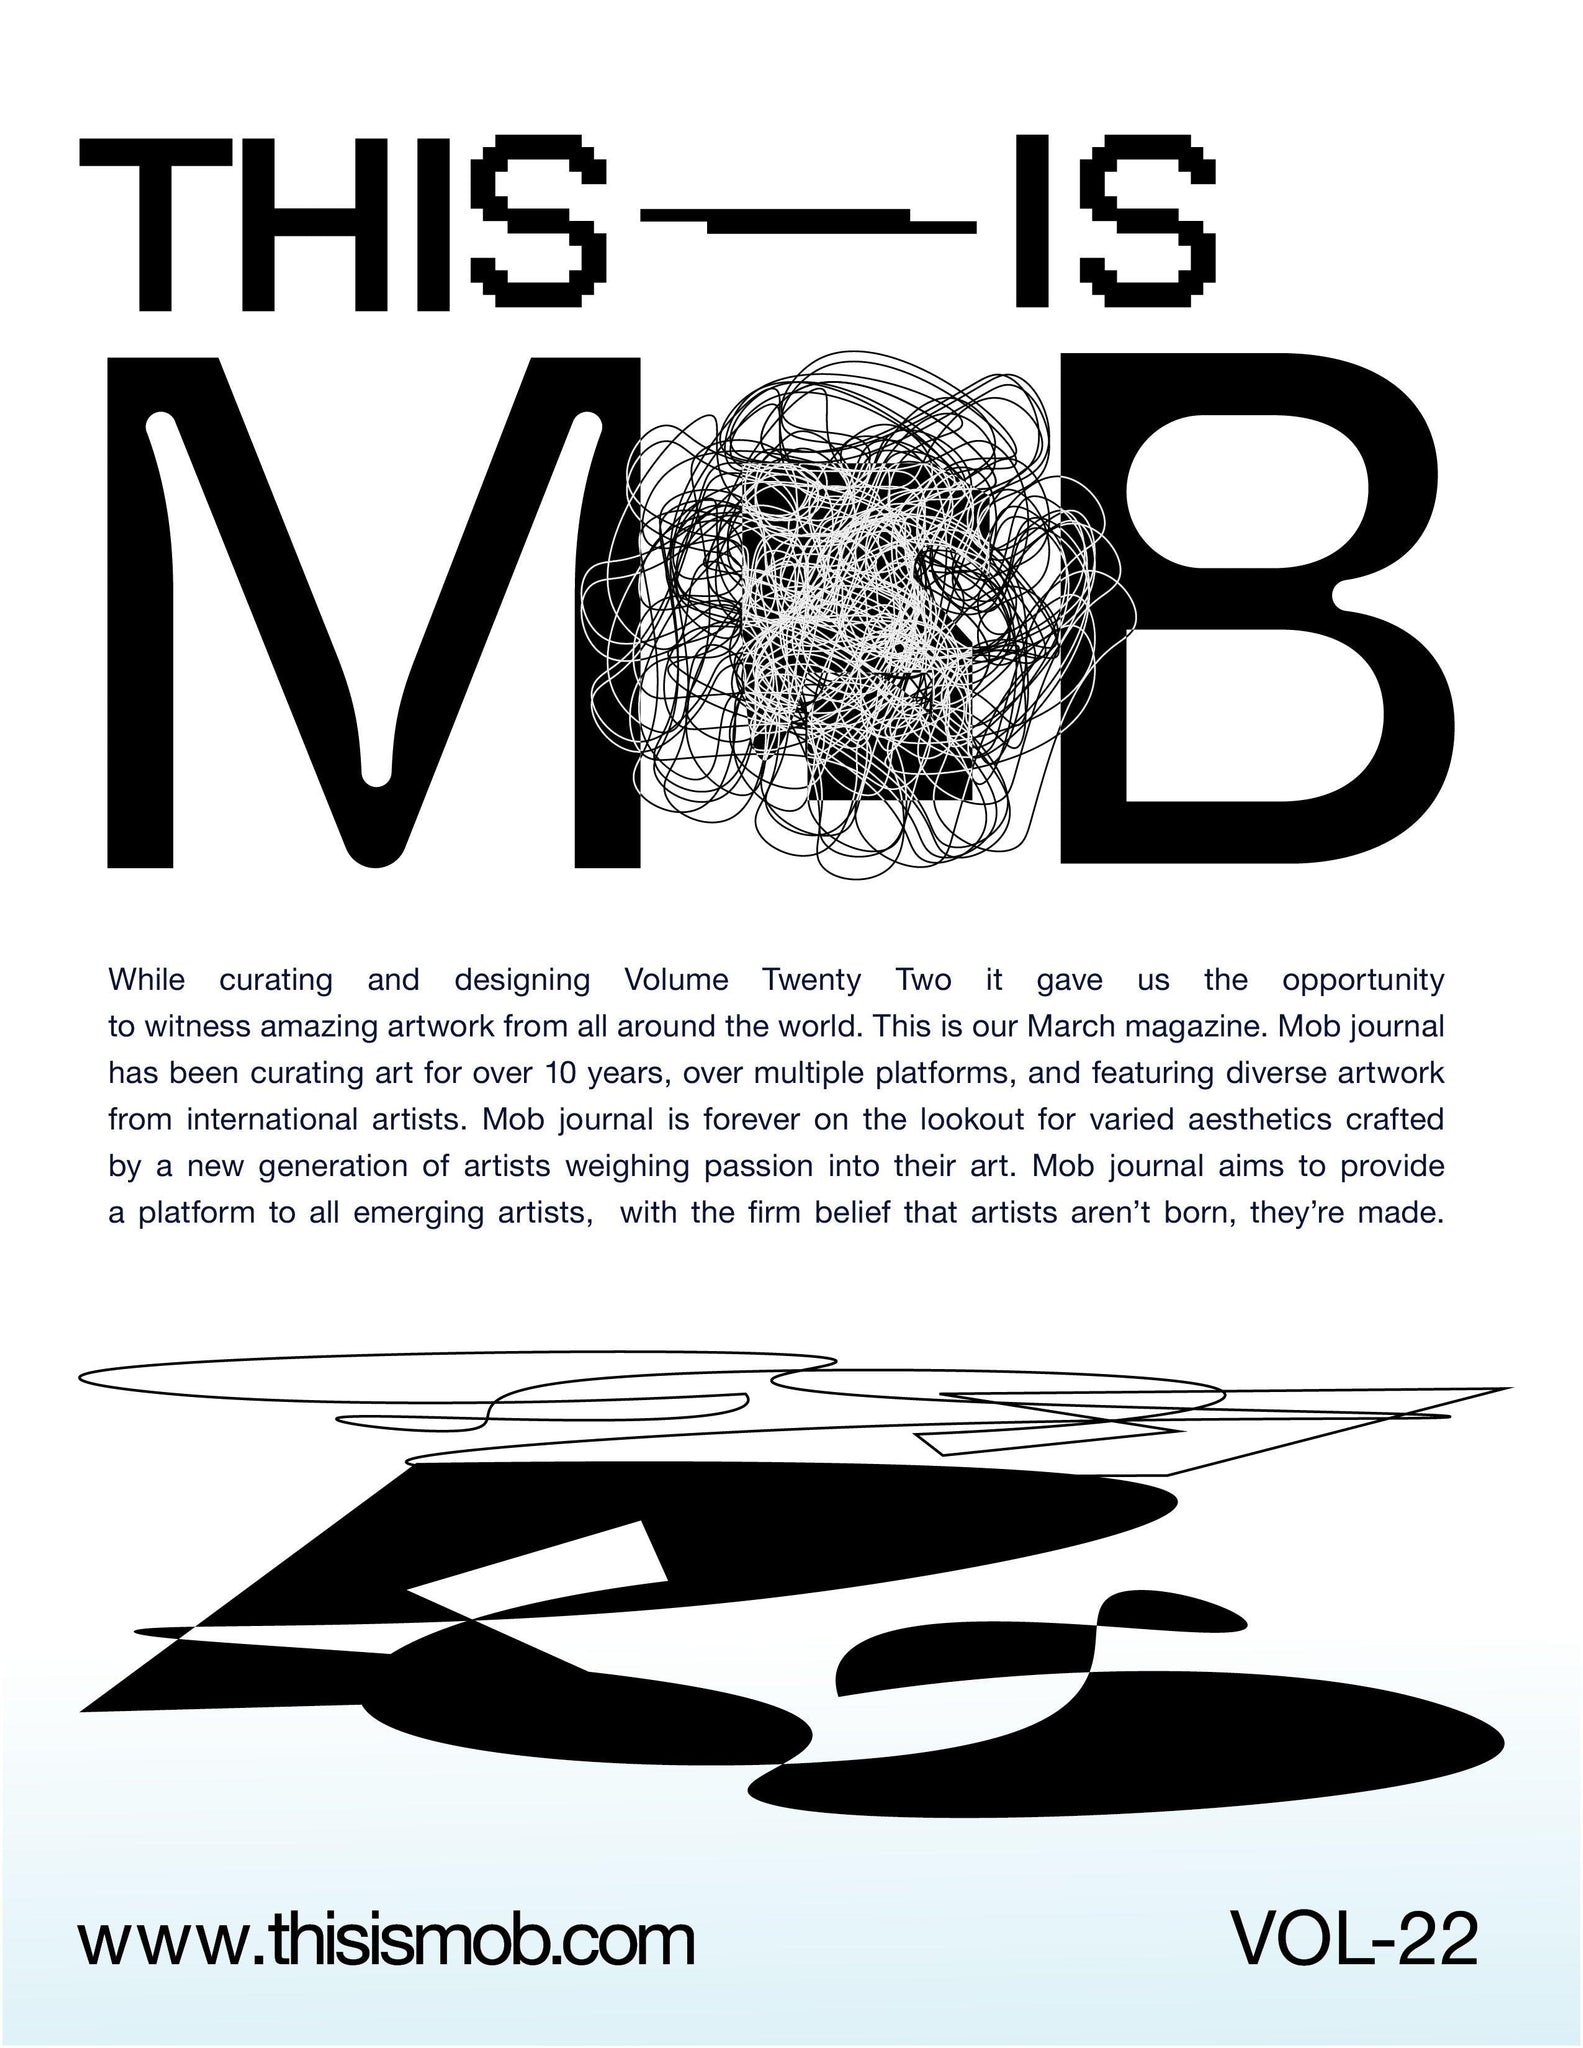 MOB JOURNAL | VOLUME TWENTY TWO | ISSUE #45 - Mob Journal